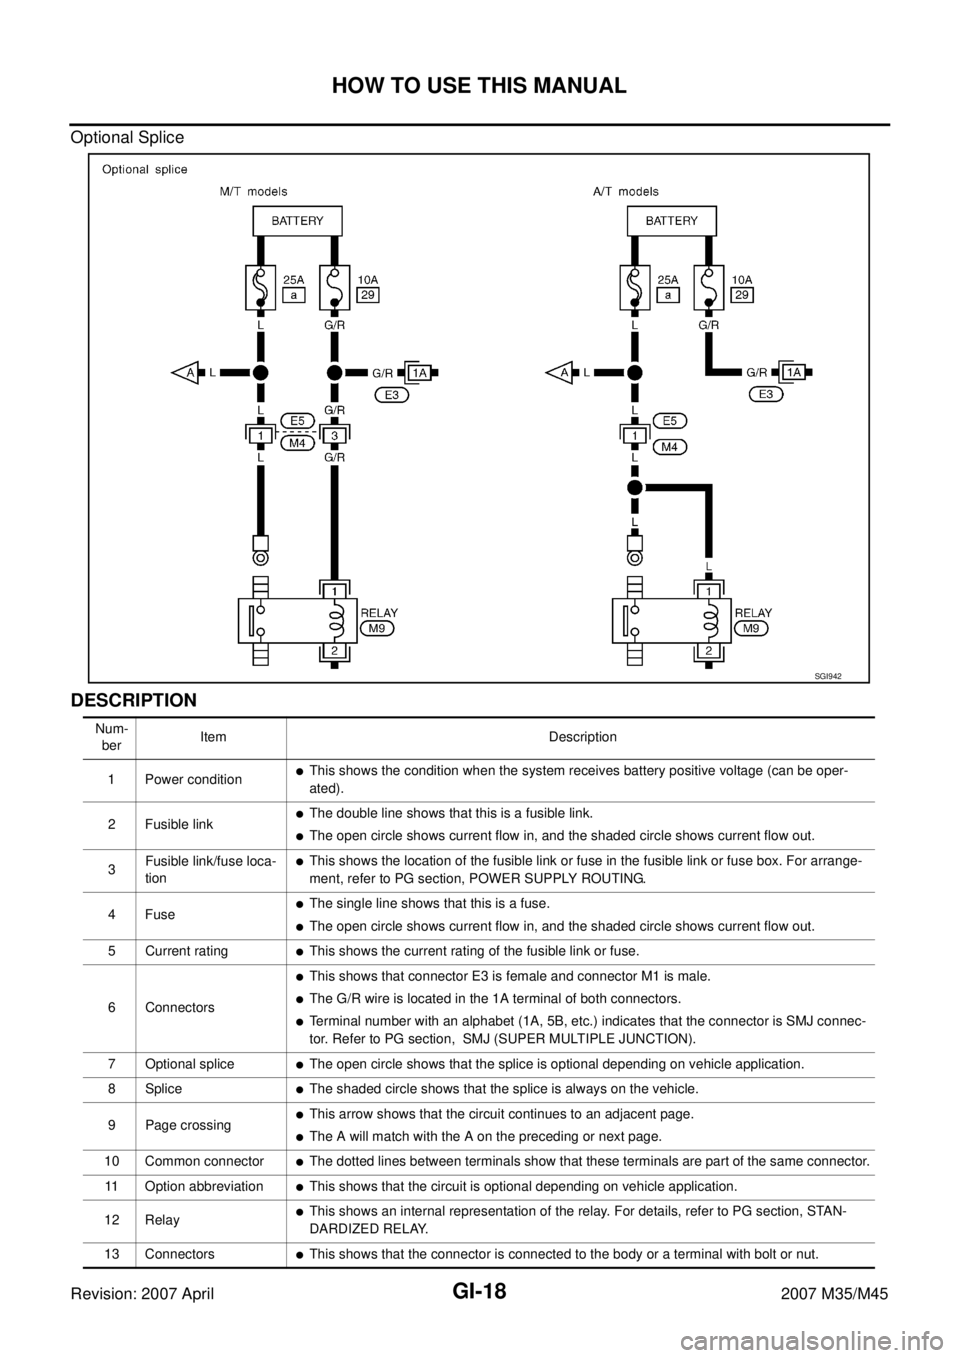 INFINITI M35 2007  Factory Service Manual GI-18
HOW TO USE THIS MANUAL
Revision: 2007 April2007 M35/M45
Optional Splice
DESCRIPTION 
SGI942
Num-
berItem Description
1 Power condition
This shows the condition when the system receives battery 